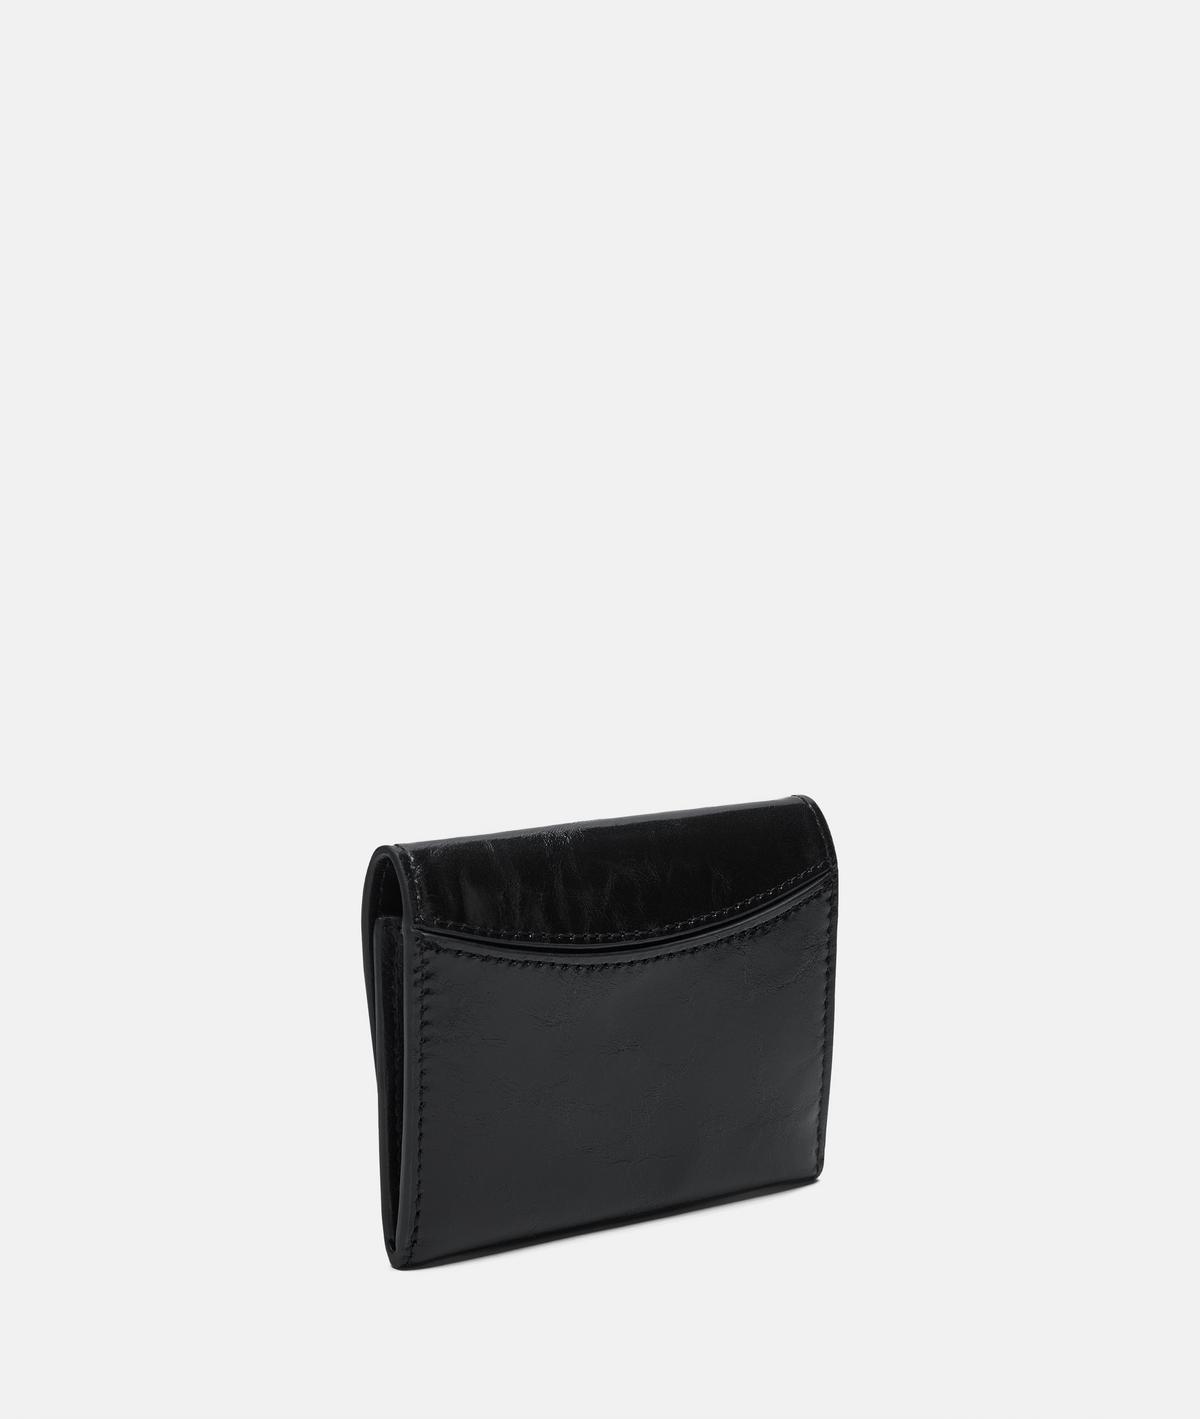 Small purses in trendy designs | LIEBESKIND BERLIN